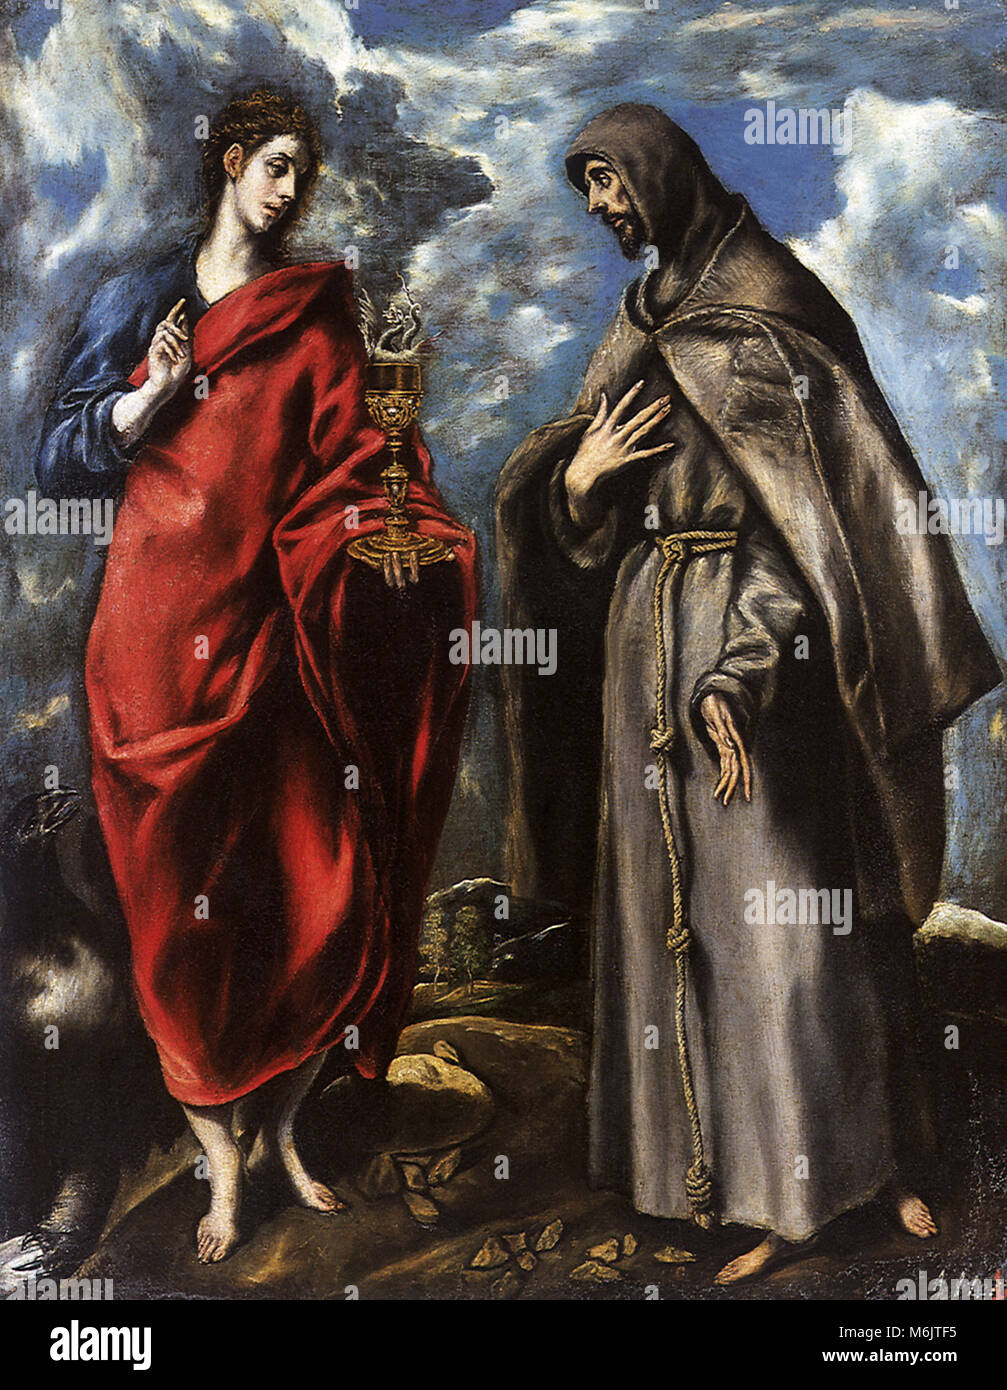 Saints John the Evangelist and Francis, El Greco, Domenicos Theotocopo, 1600. Stock Photo